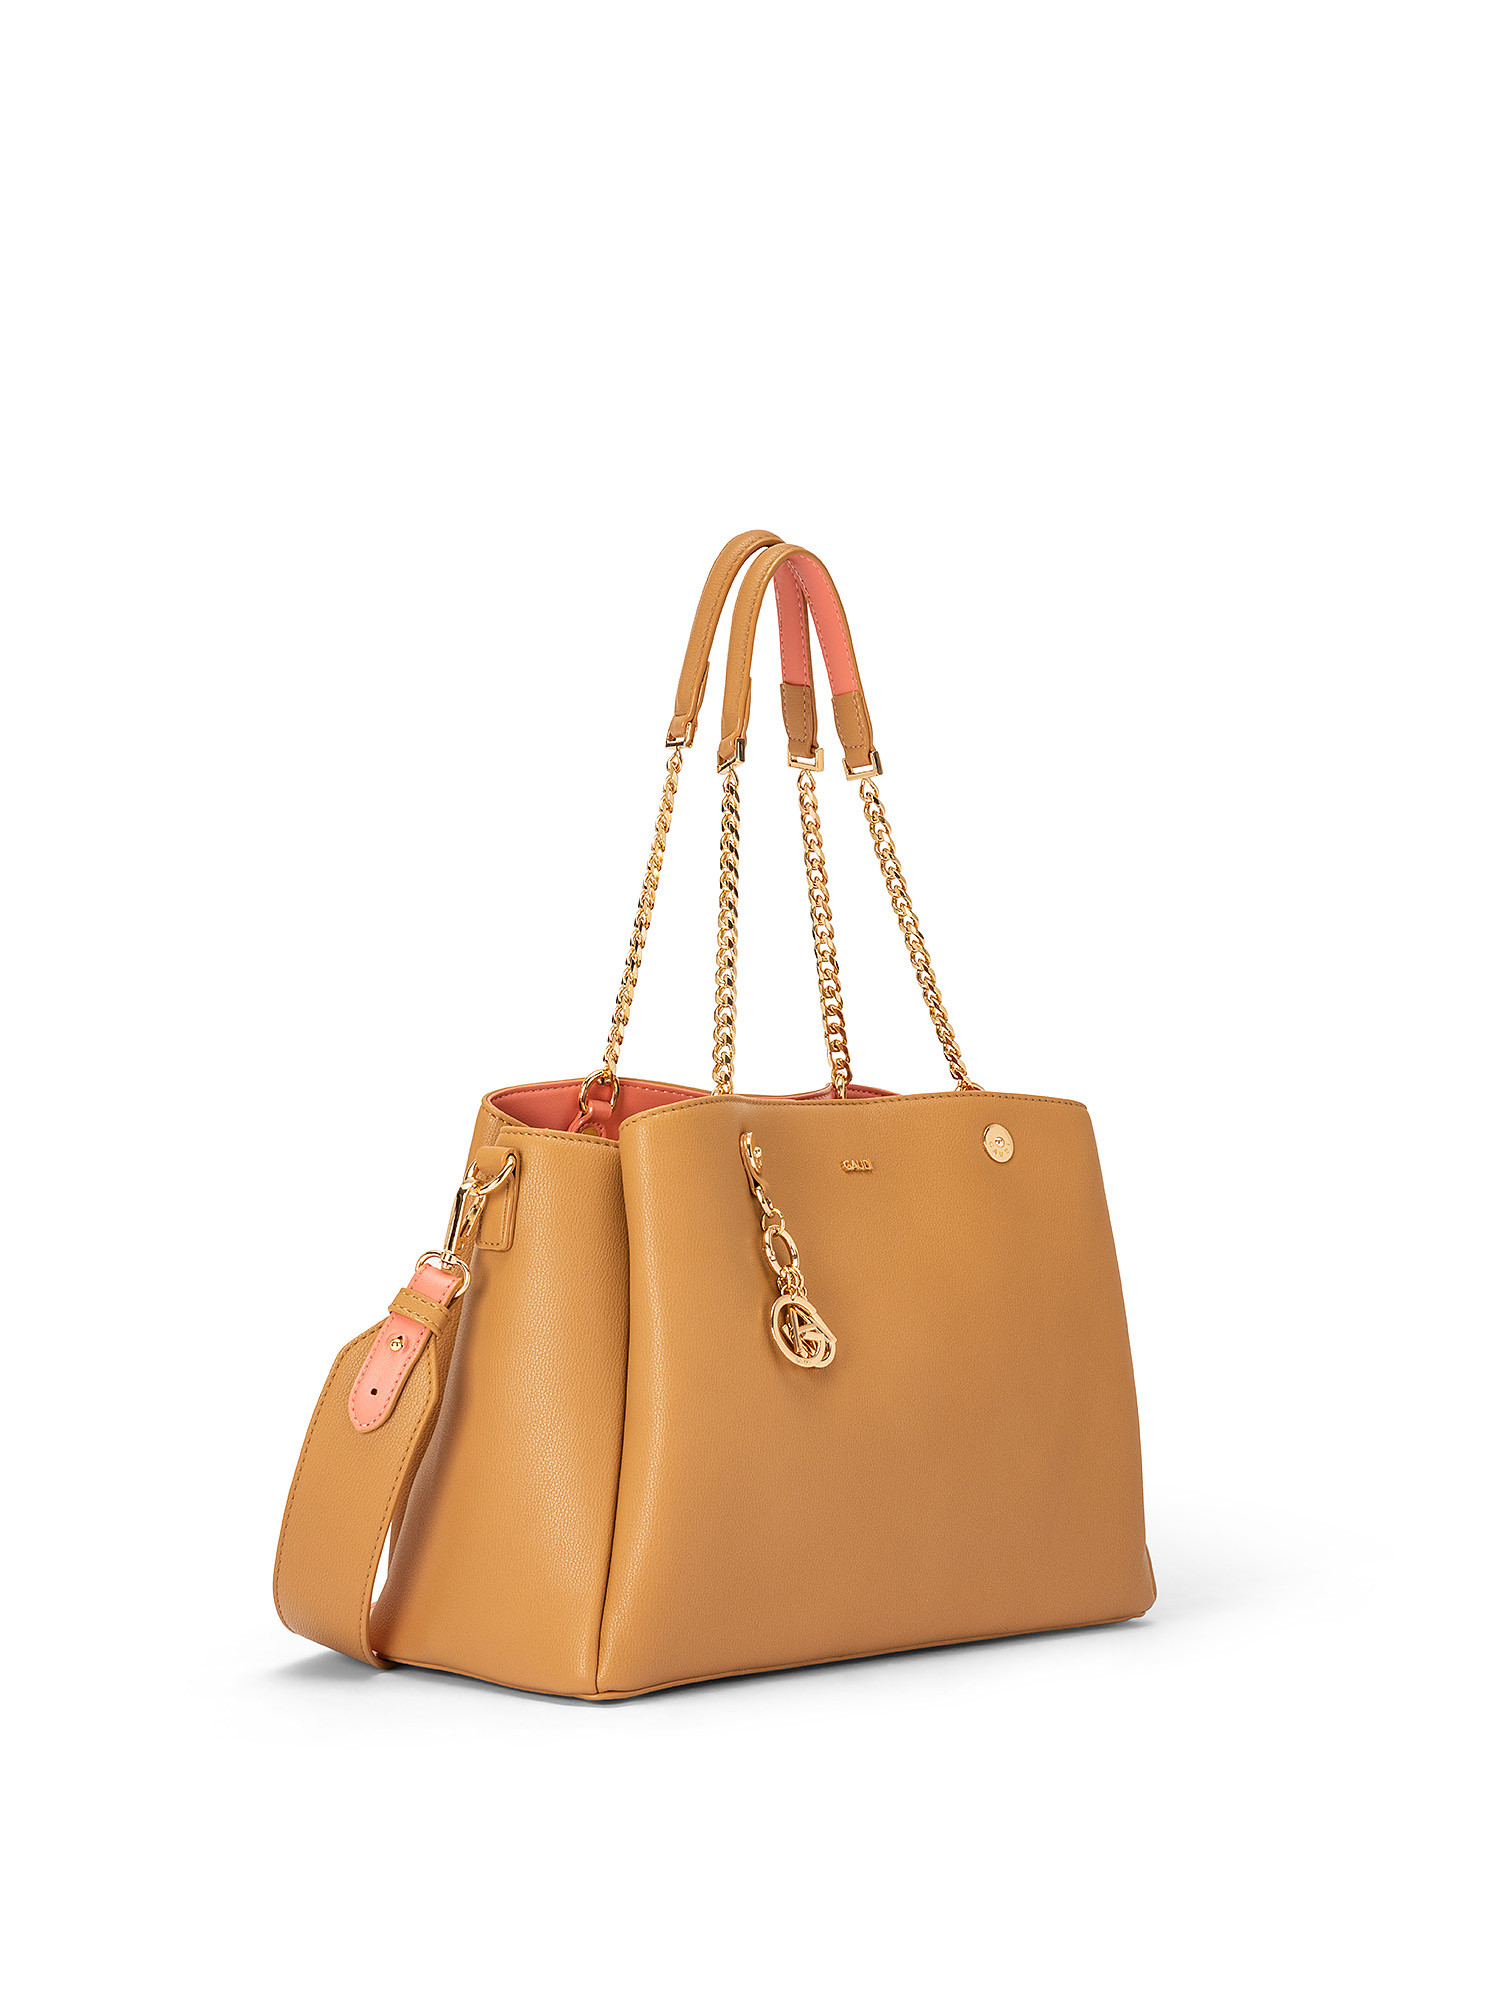 Tonya shopping bag, Leather Brown, large image number 1